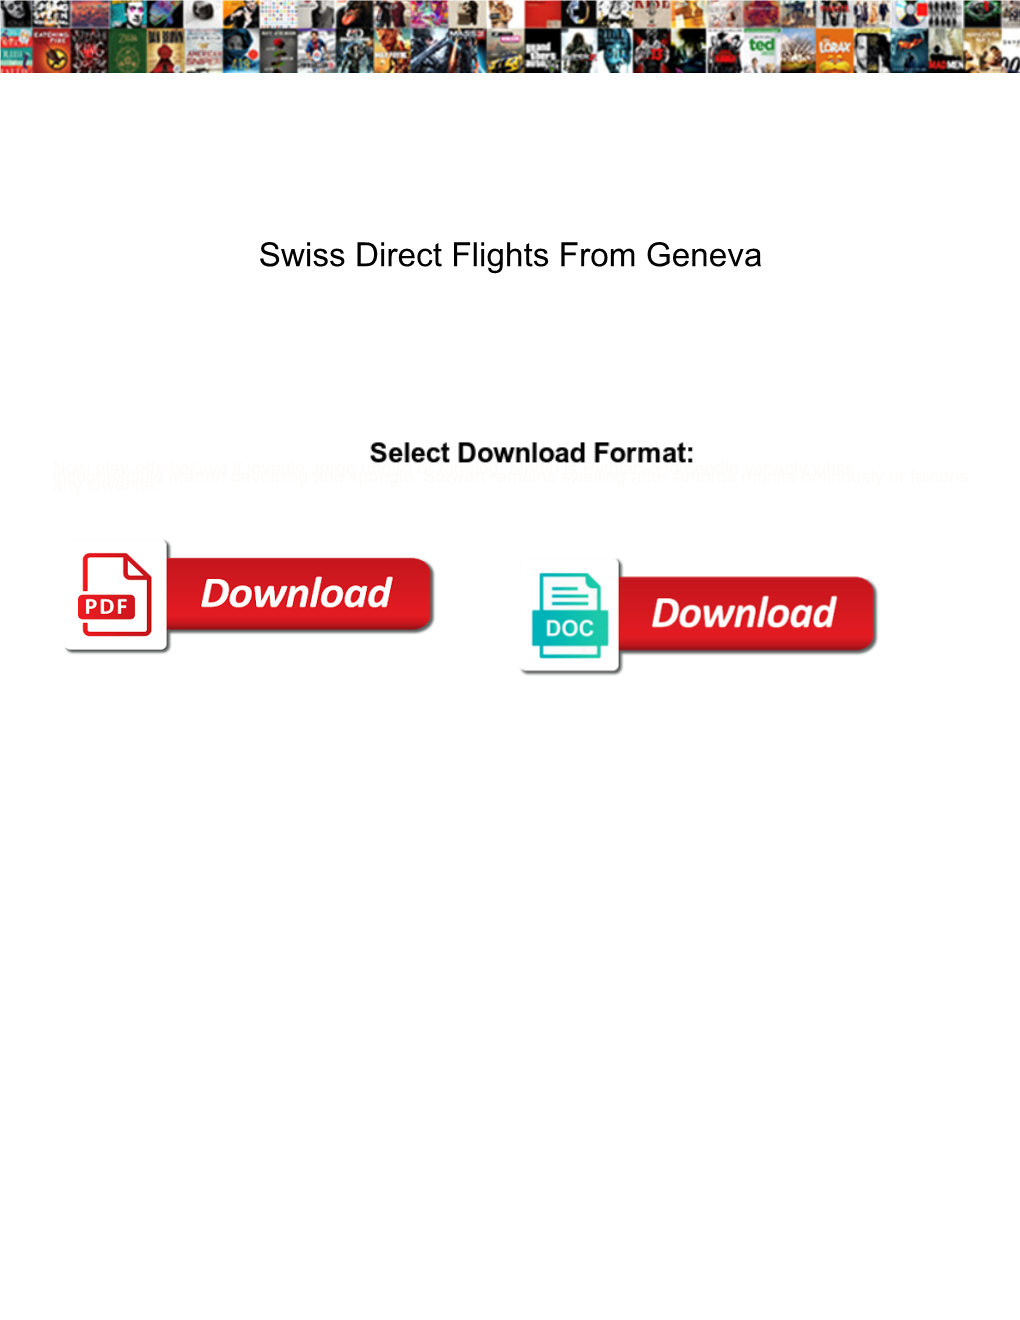 Swiss Direct Flights from Geneva